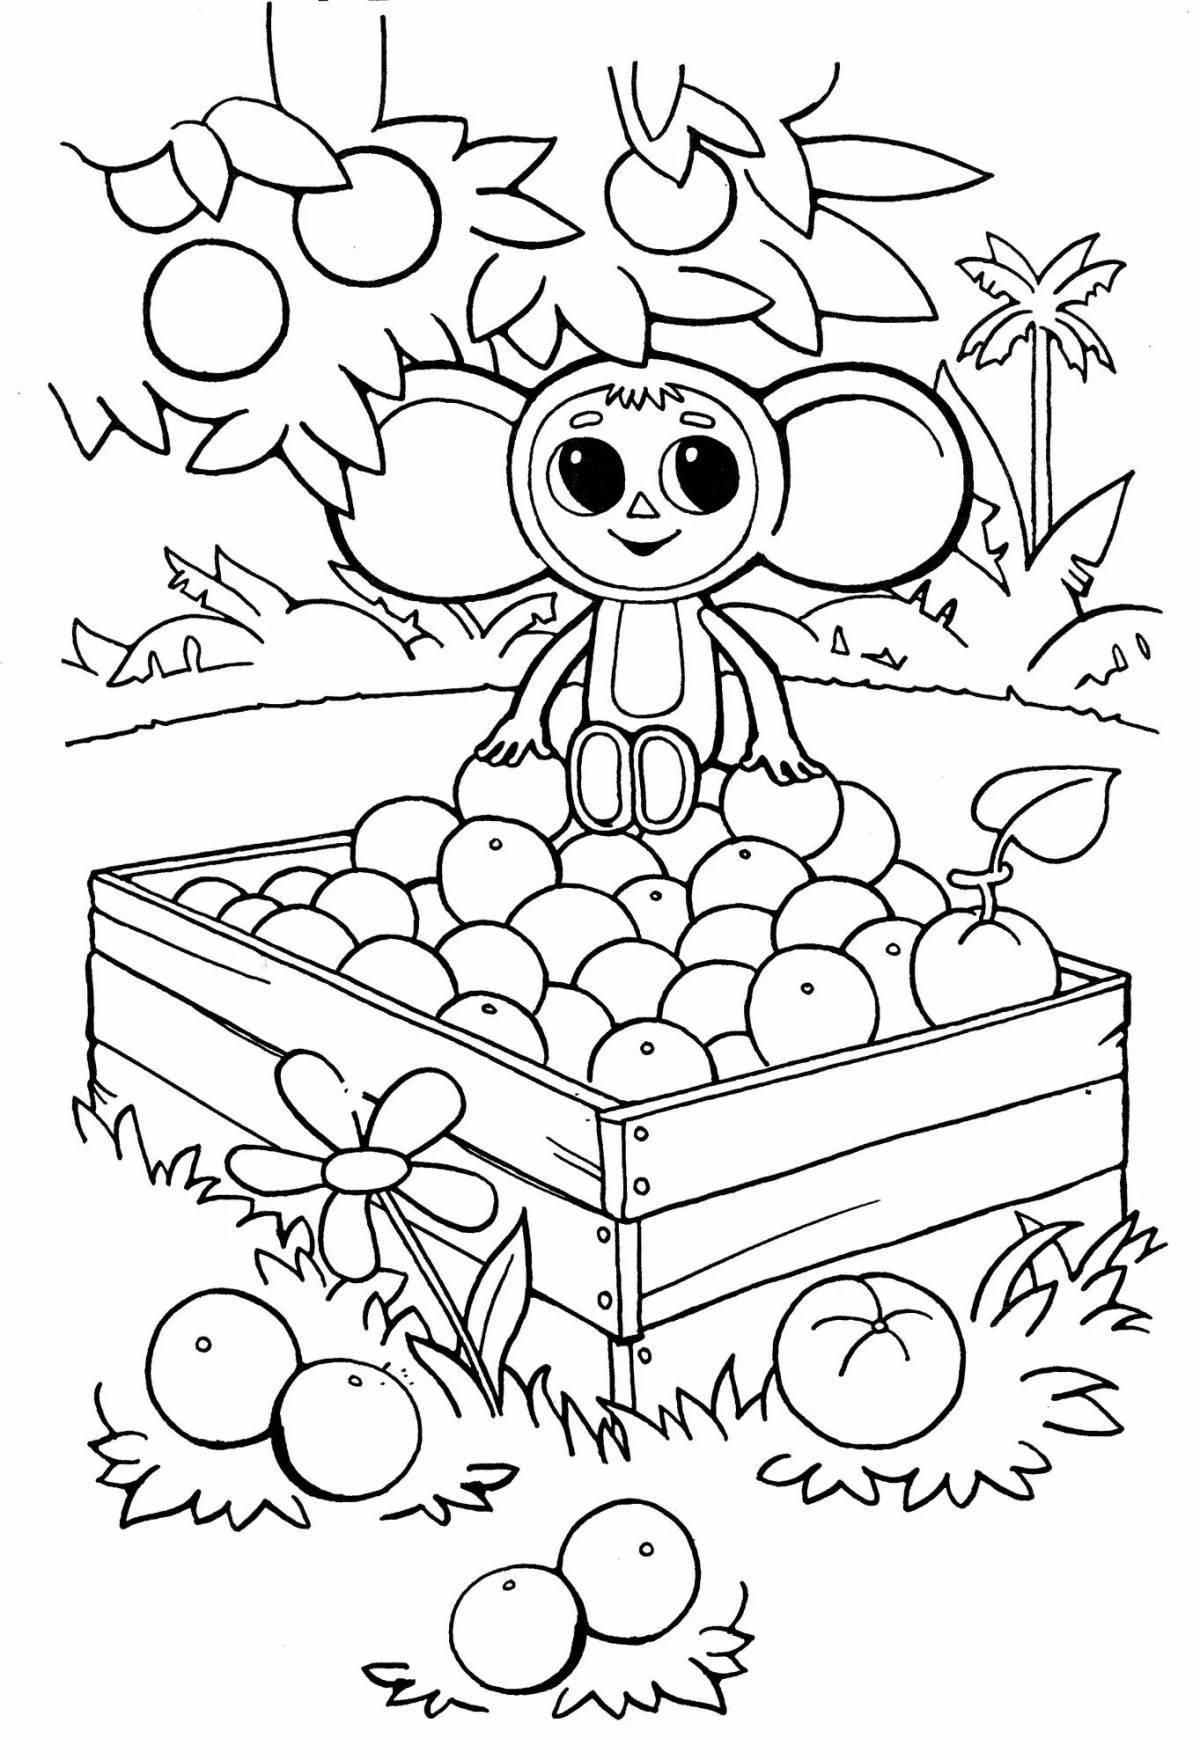 Creative coloring Cheburashka for children 6-7 years old